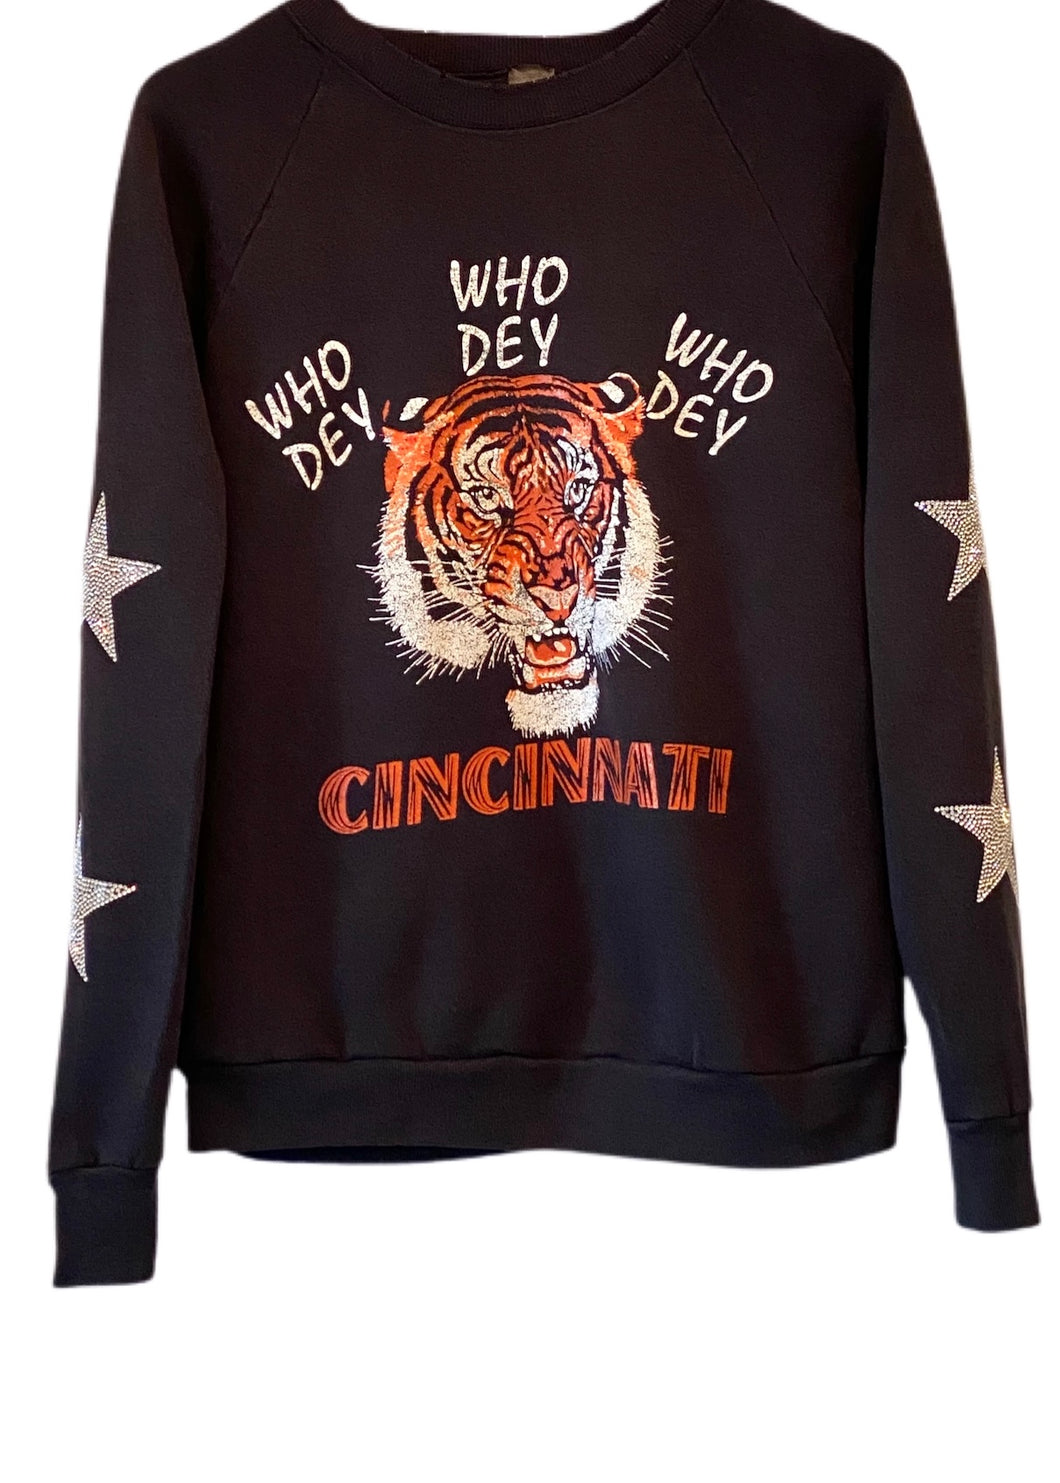 Cincinnati Bengals, NFL One of a KIND Vintage “ Who Dey! “ Sweatshirt with Crystal Star Design